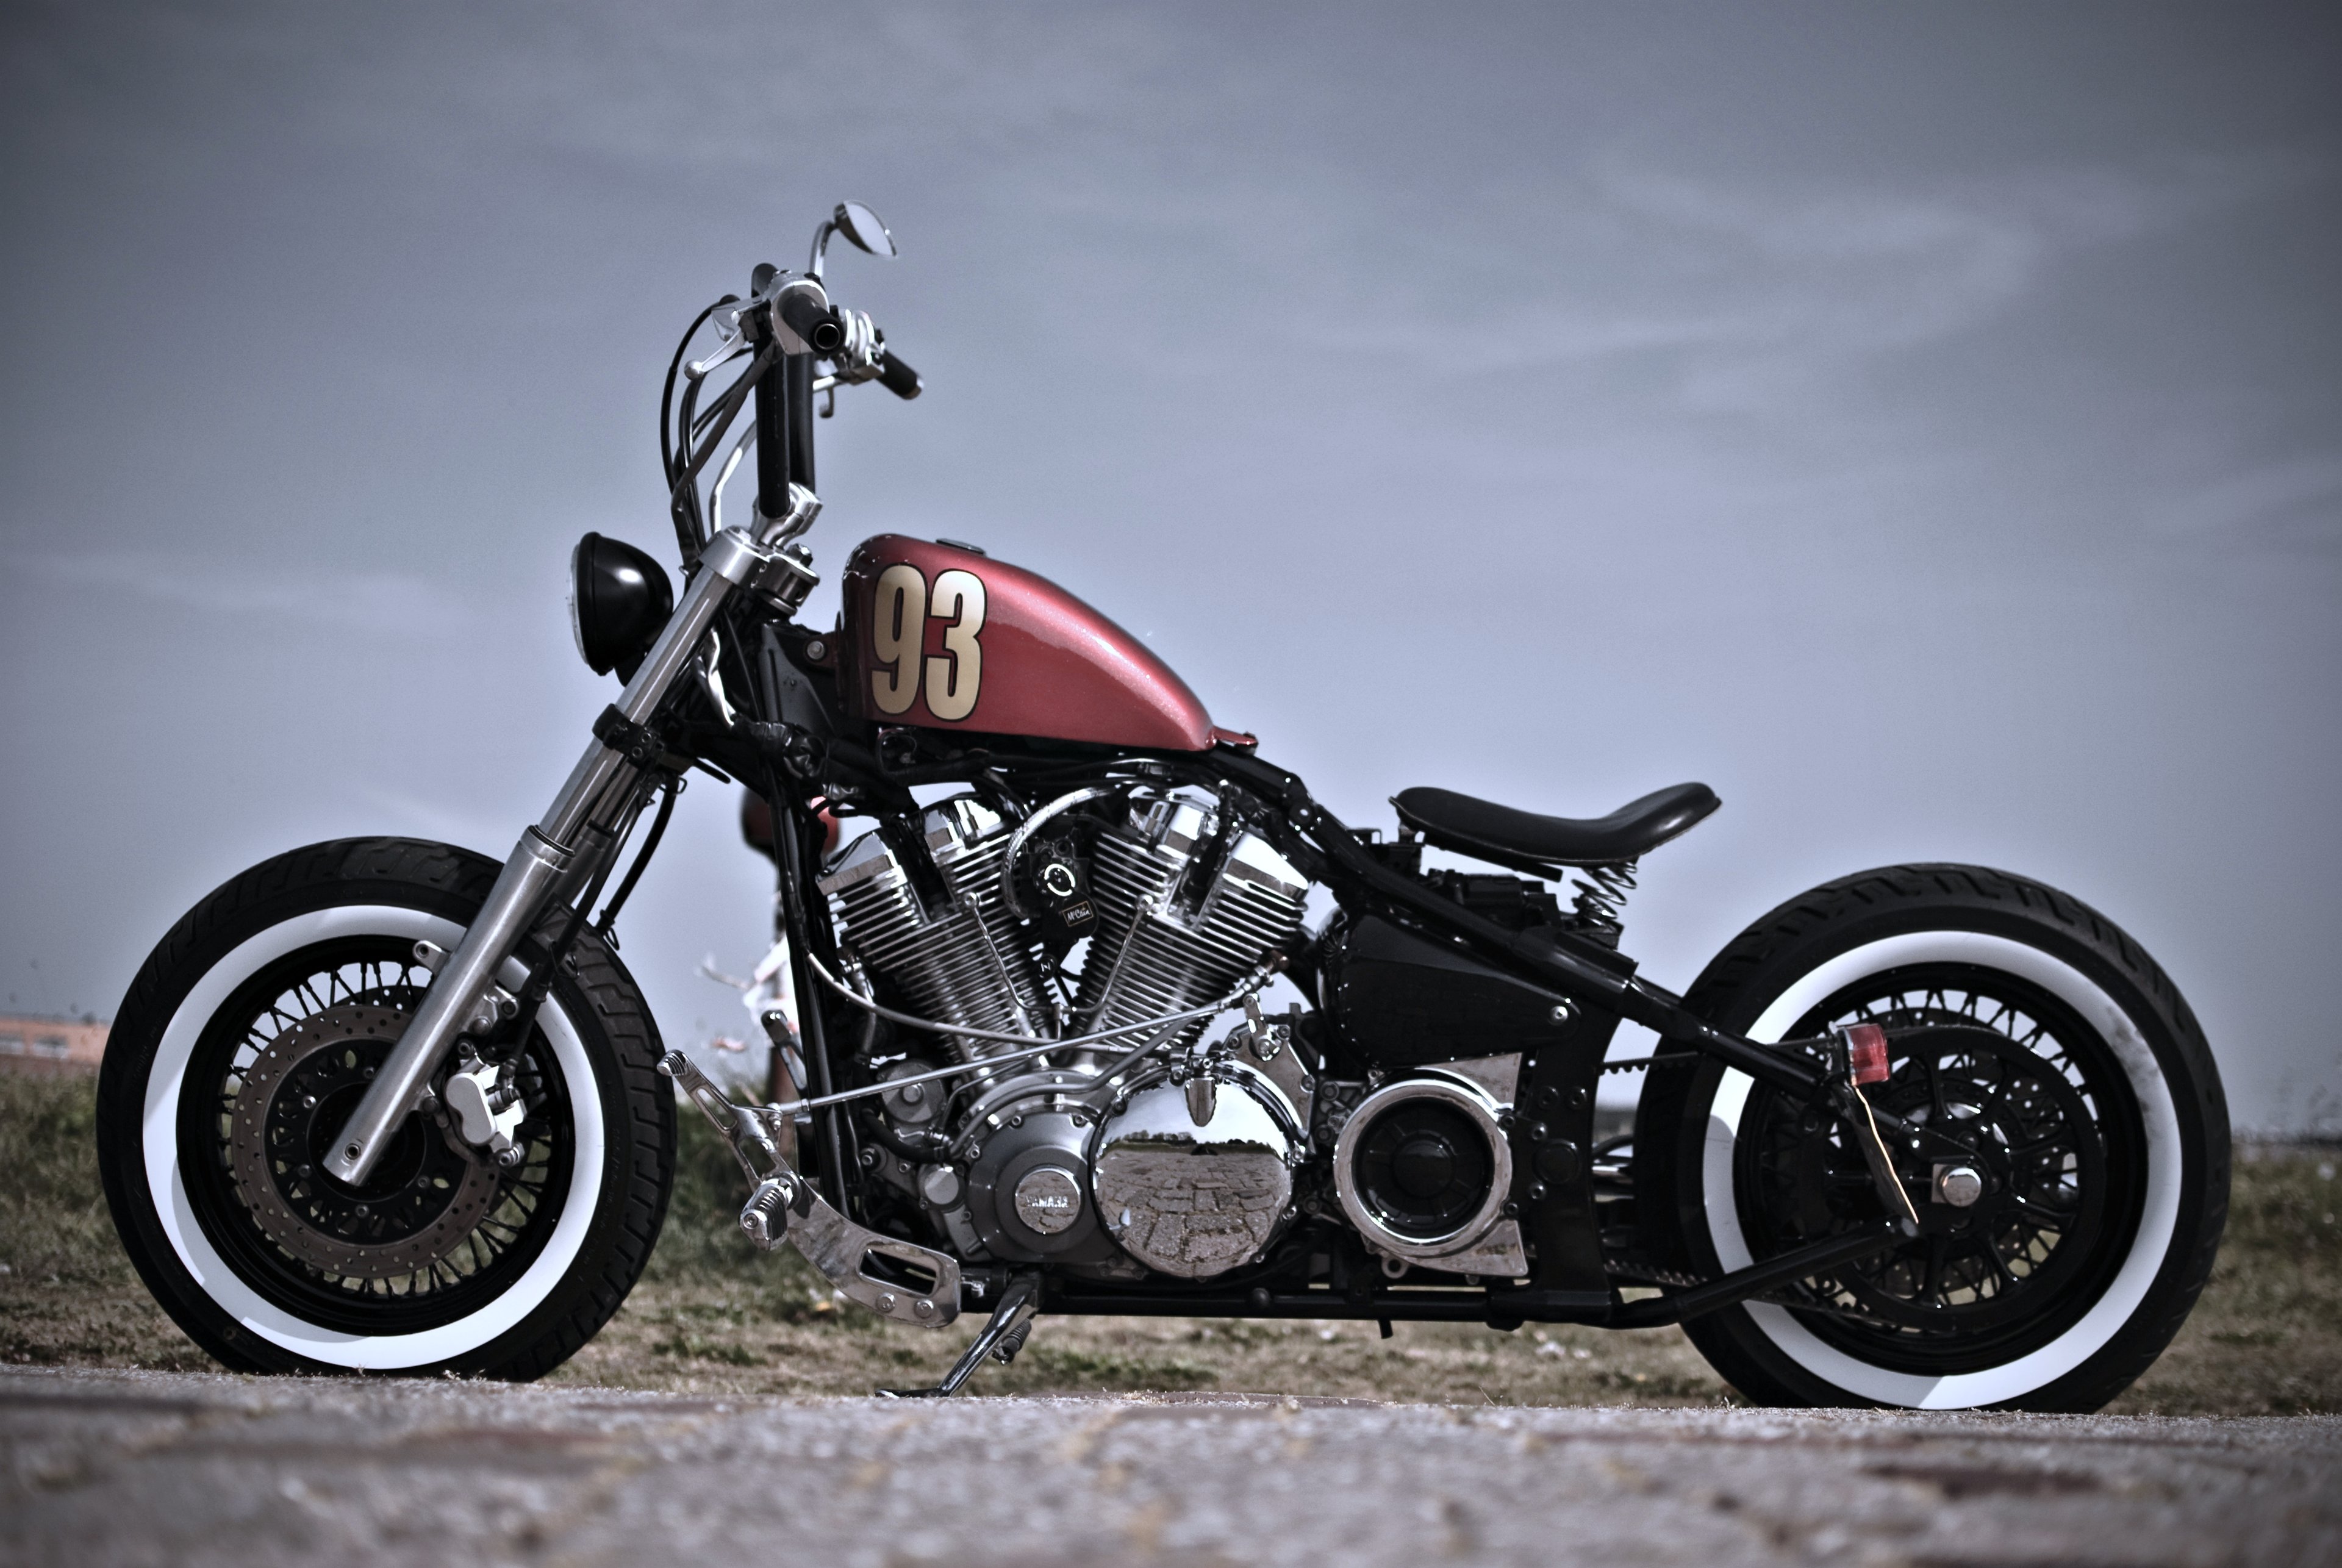 xv1600,  , Motorcycle,  , Bike,  , Classic,  , Road,  , Harley davidson,  , Sky,  , Old,  , Race,  , Speed Wallpaper